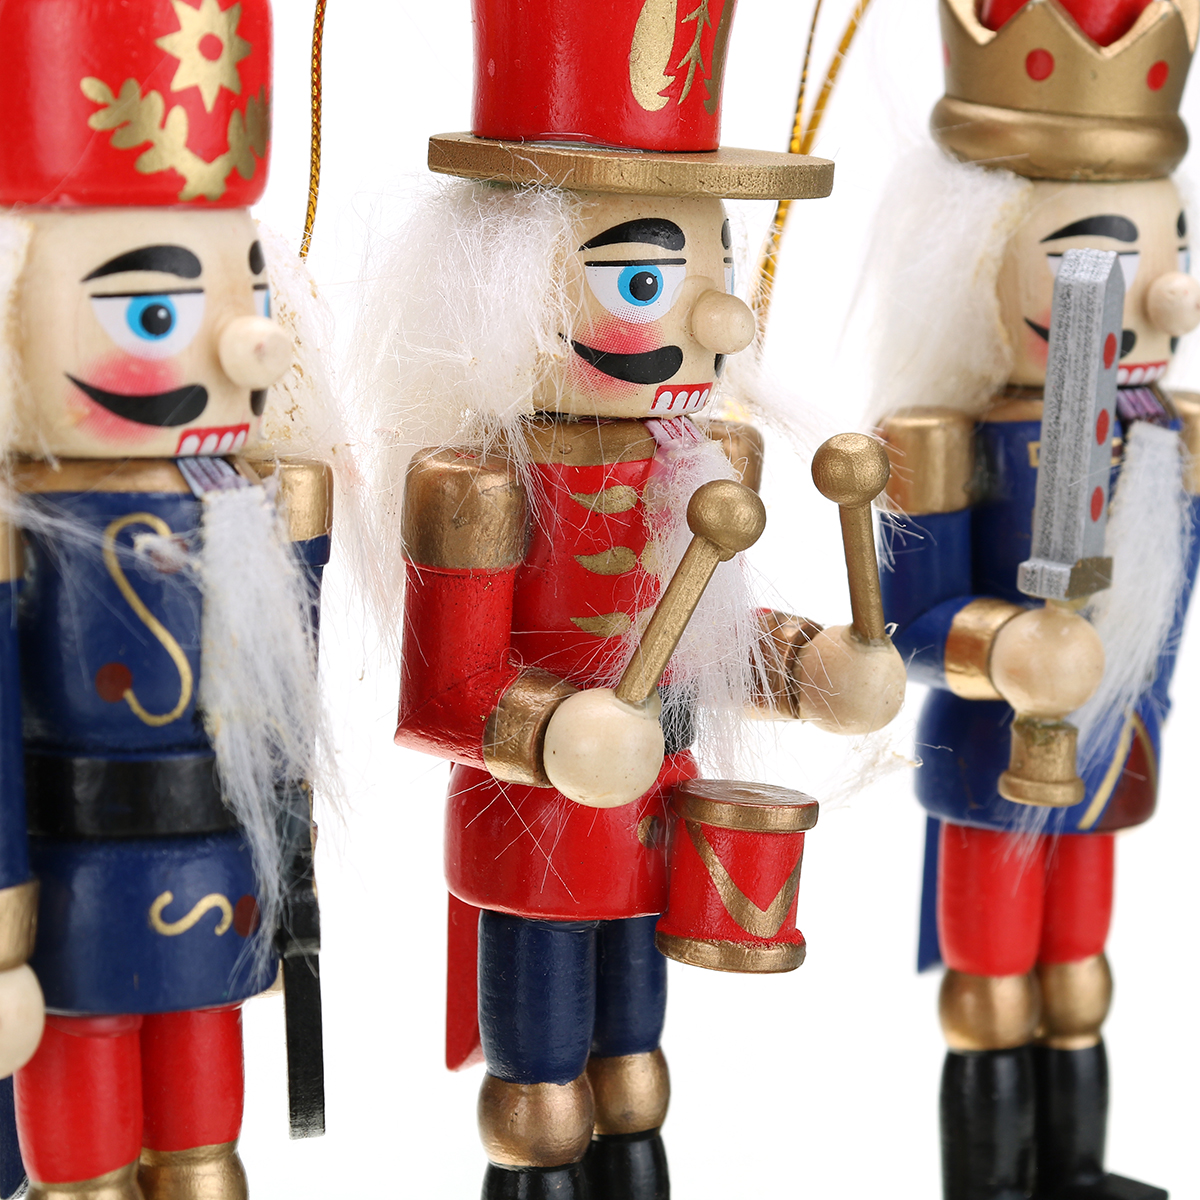 Wooden-Nutcracker-Doll-Soldier-Vintage-Handcraft-Decoration-Christmas-Gifts-1787904-10